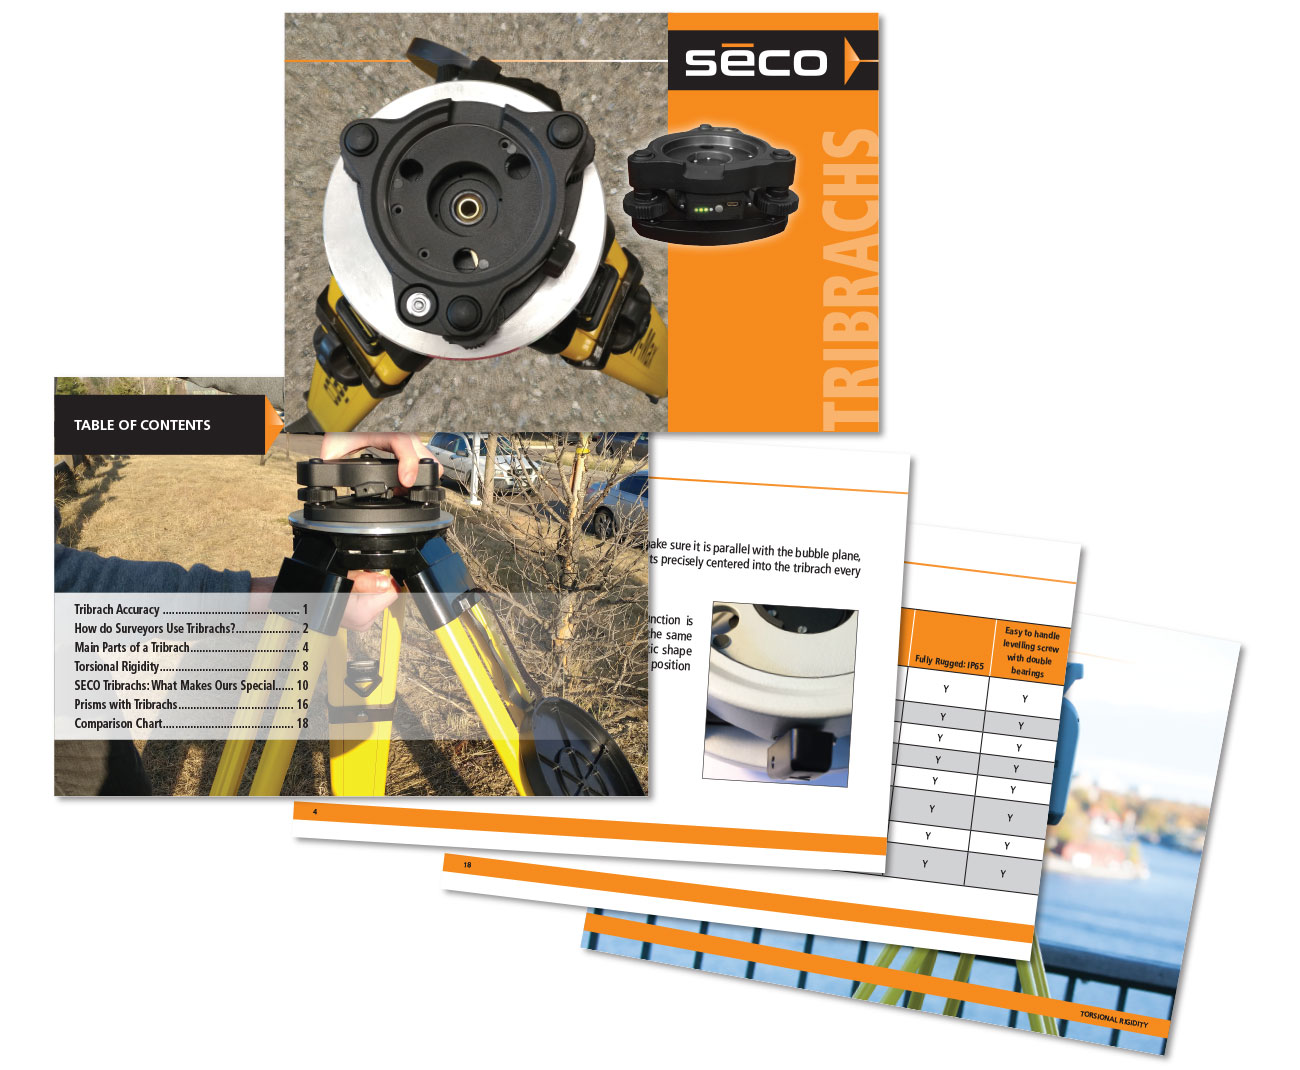 SECO Product Line Brochure